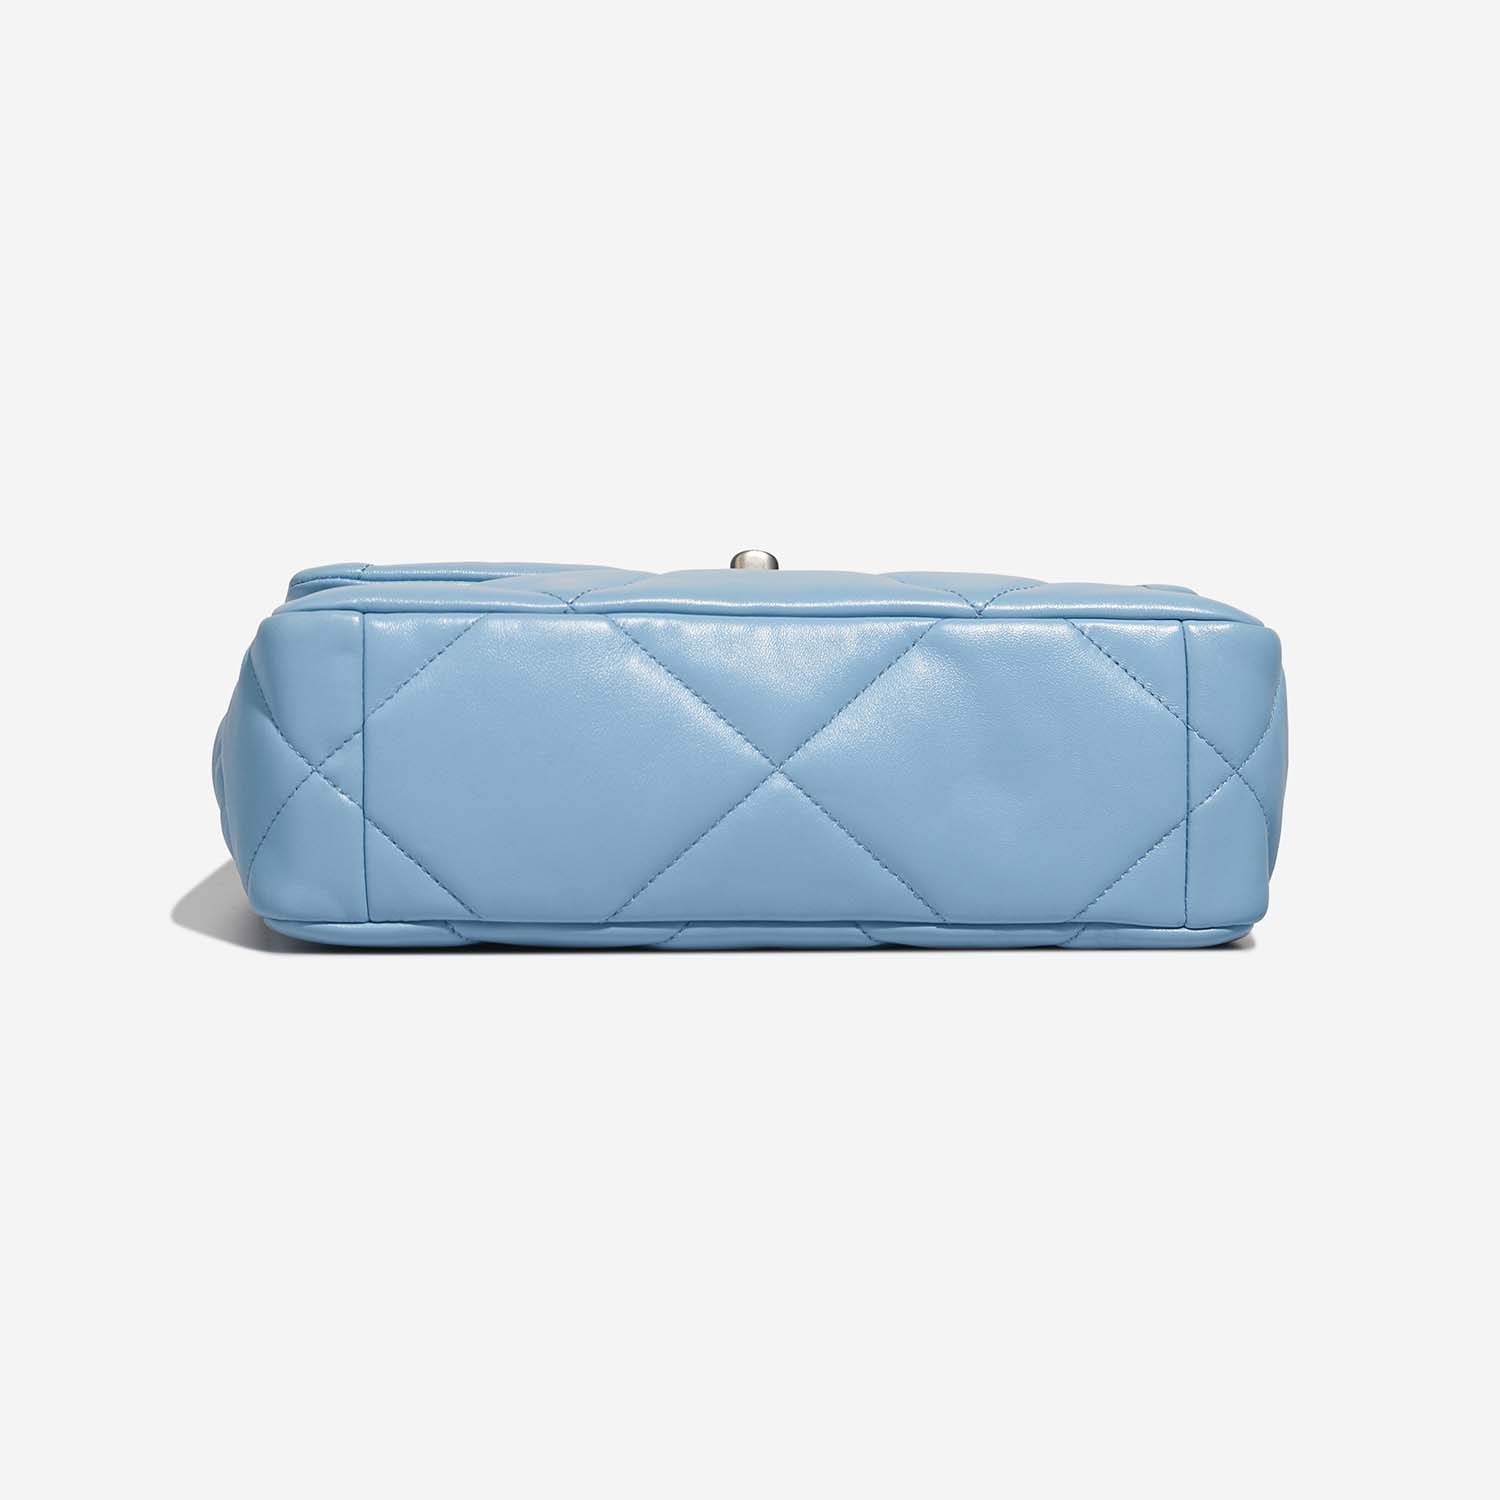 Chanel 19 Flapbag Lightblue Bottom | Sell your designer bag on Saclab.com